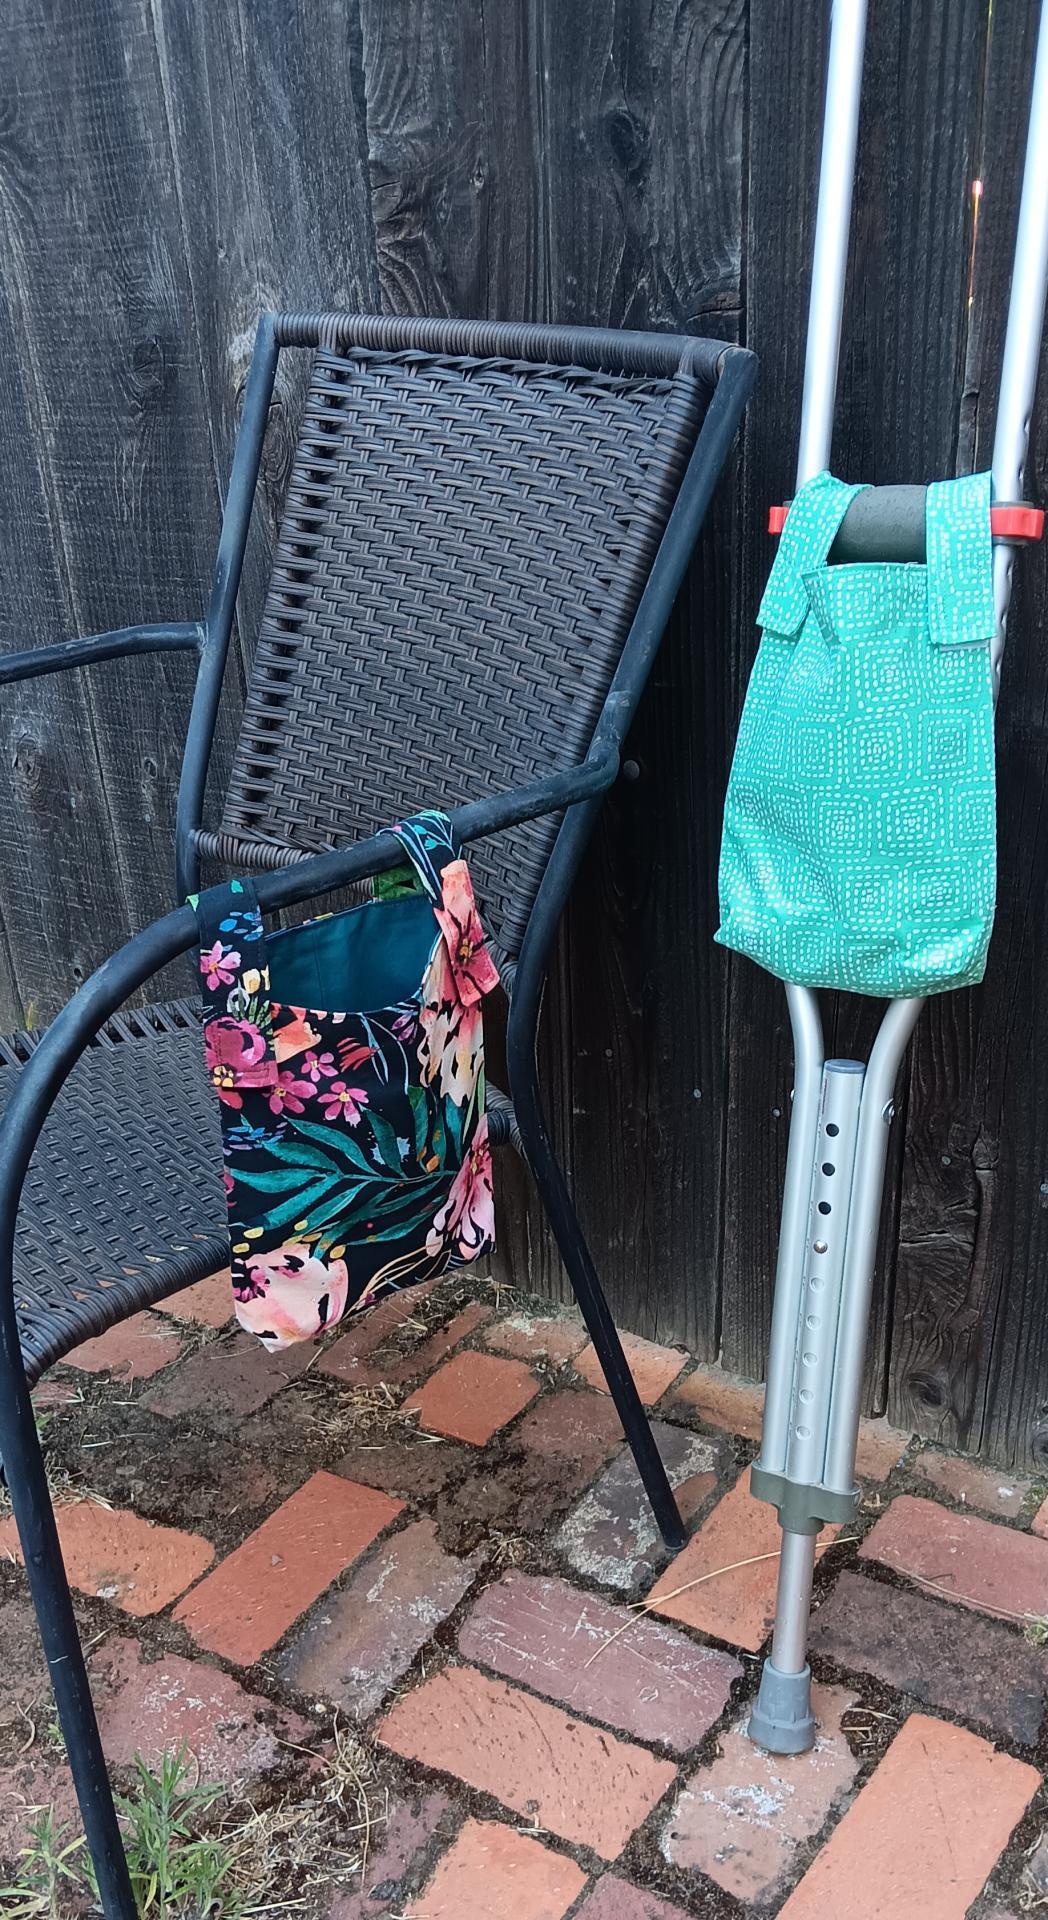 Simple small basic crutch bag, walker bag, scooter handlebars bag, bed rail caddy, hook & loop, hanging bag, red white and blue floral